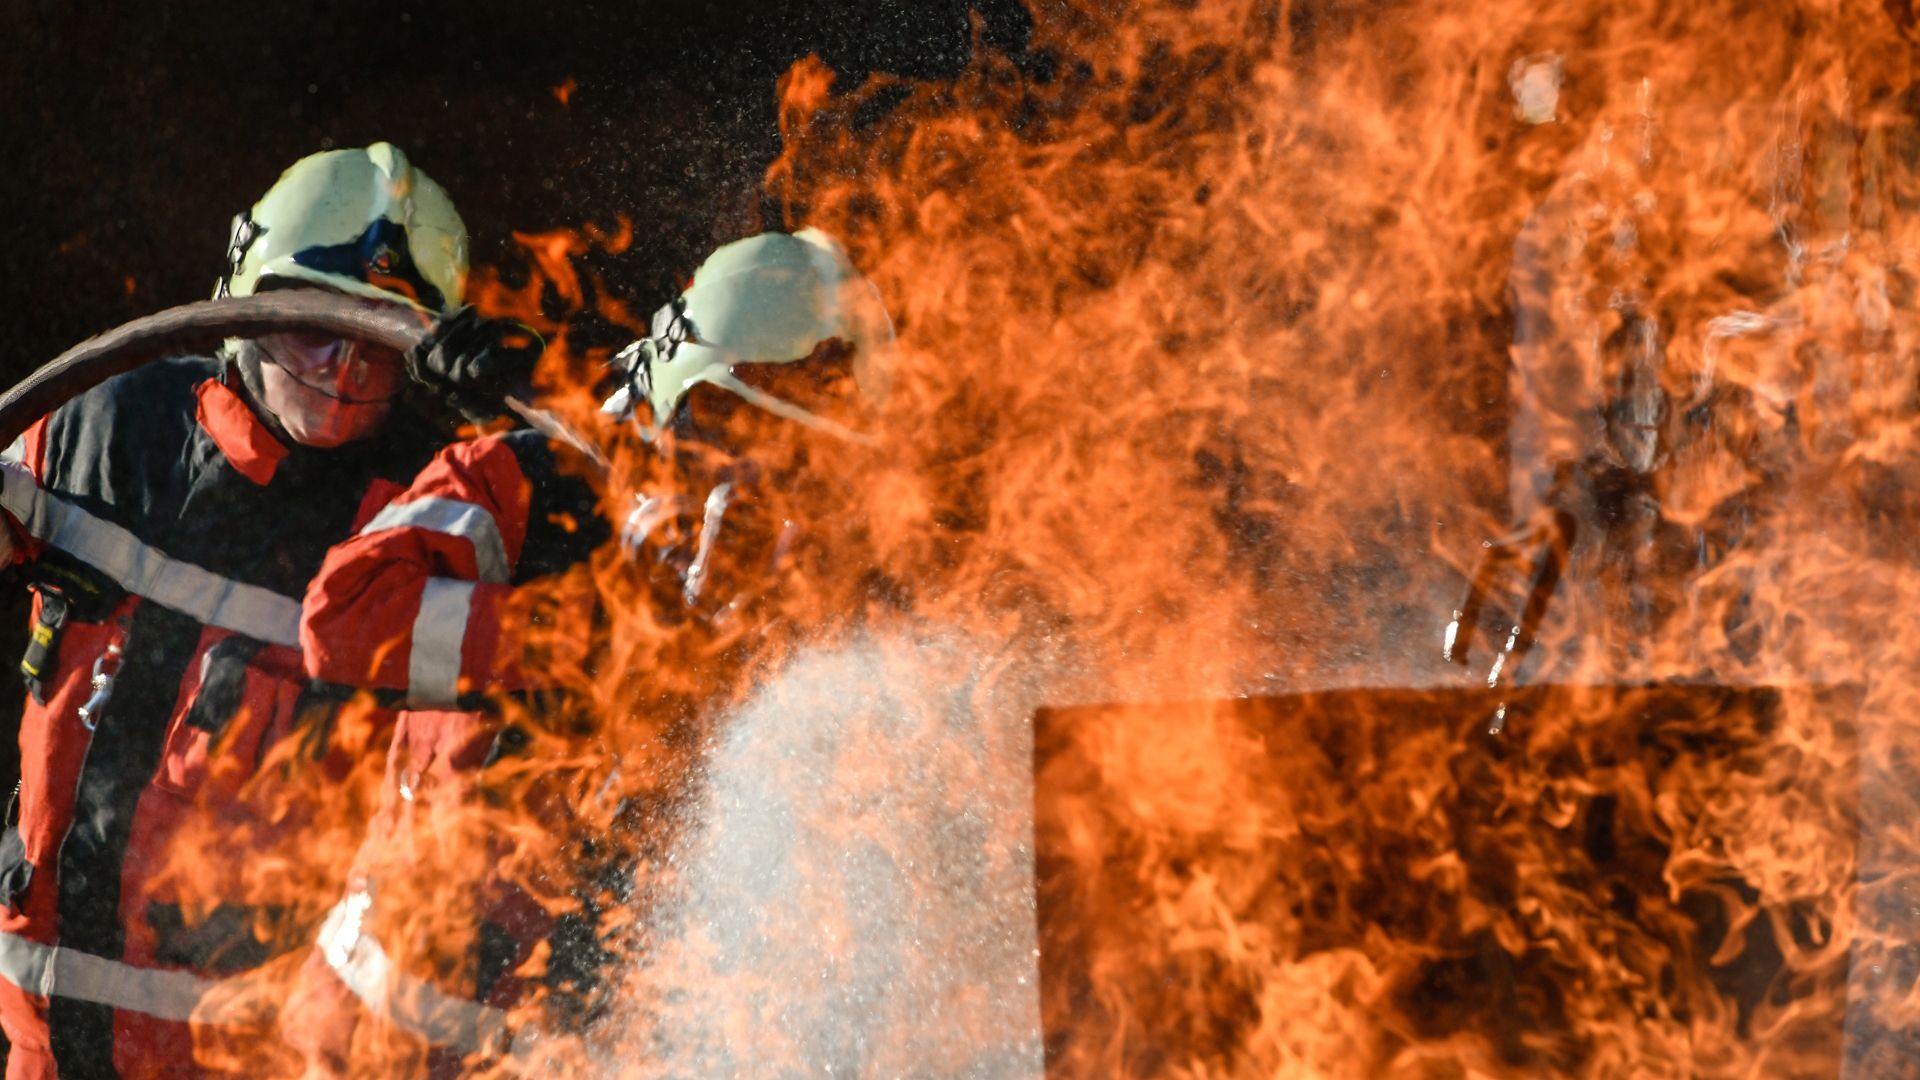 Fireman extinguishing the fire